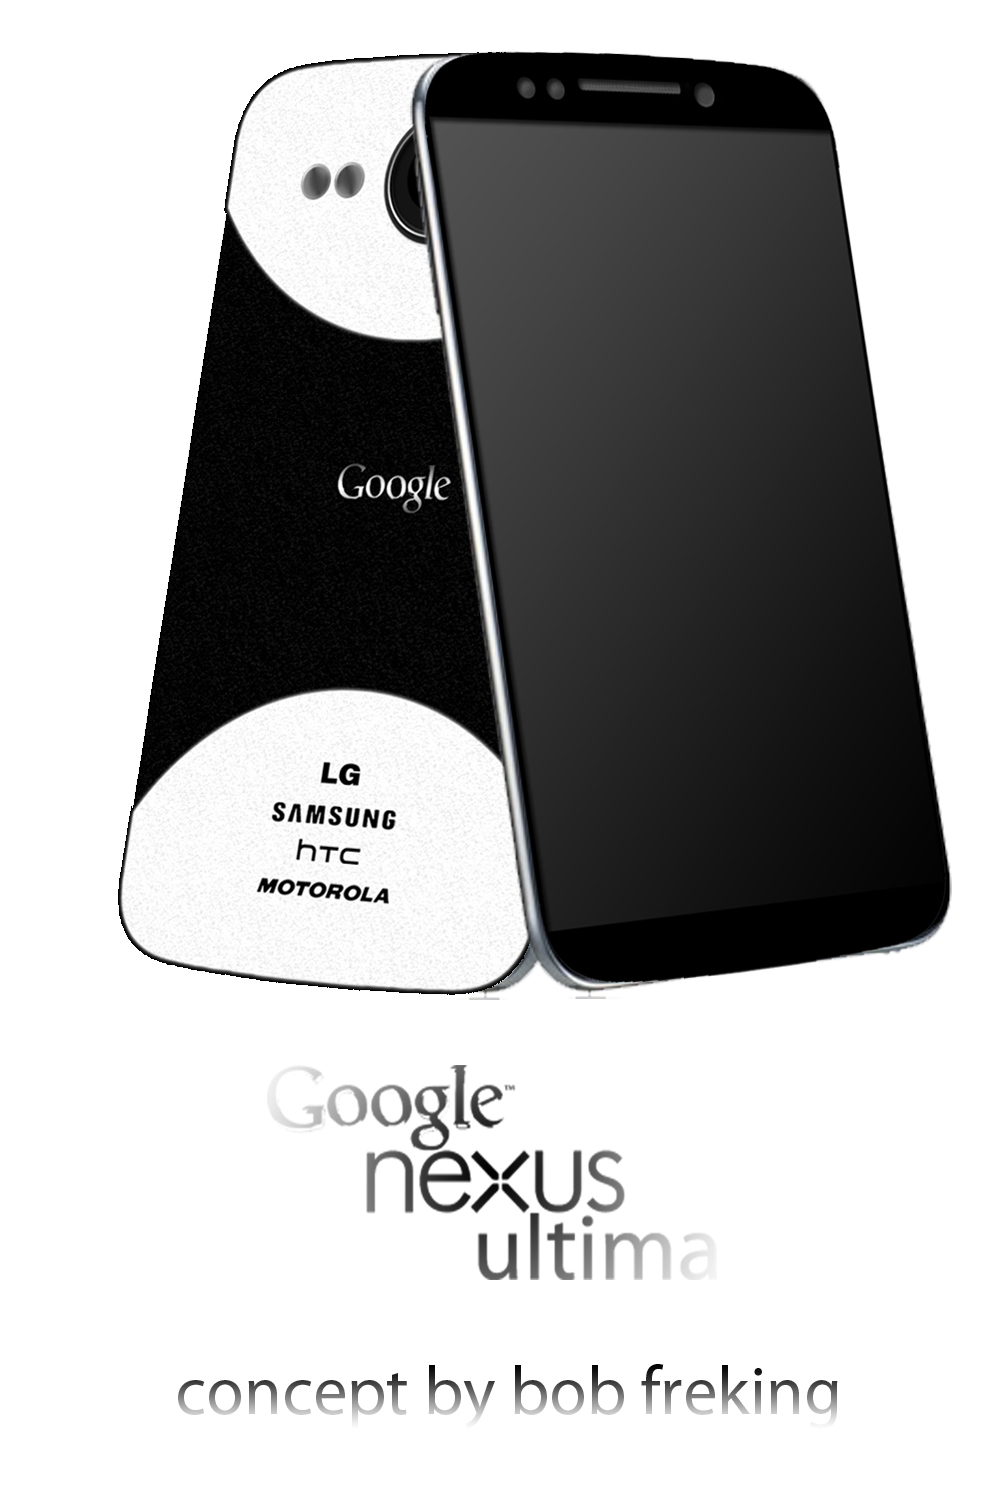 Google Nexus Ultima